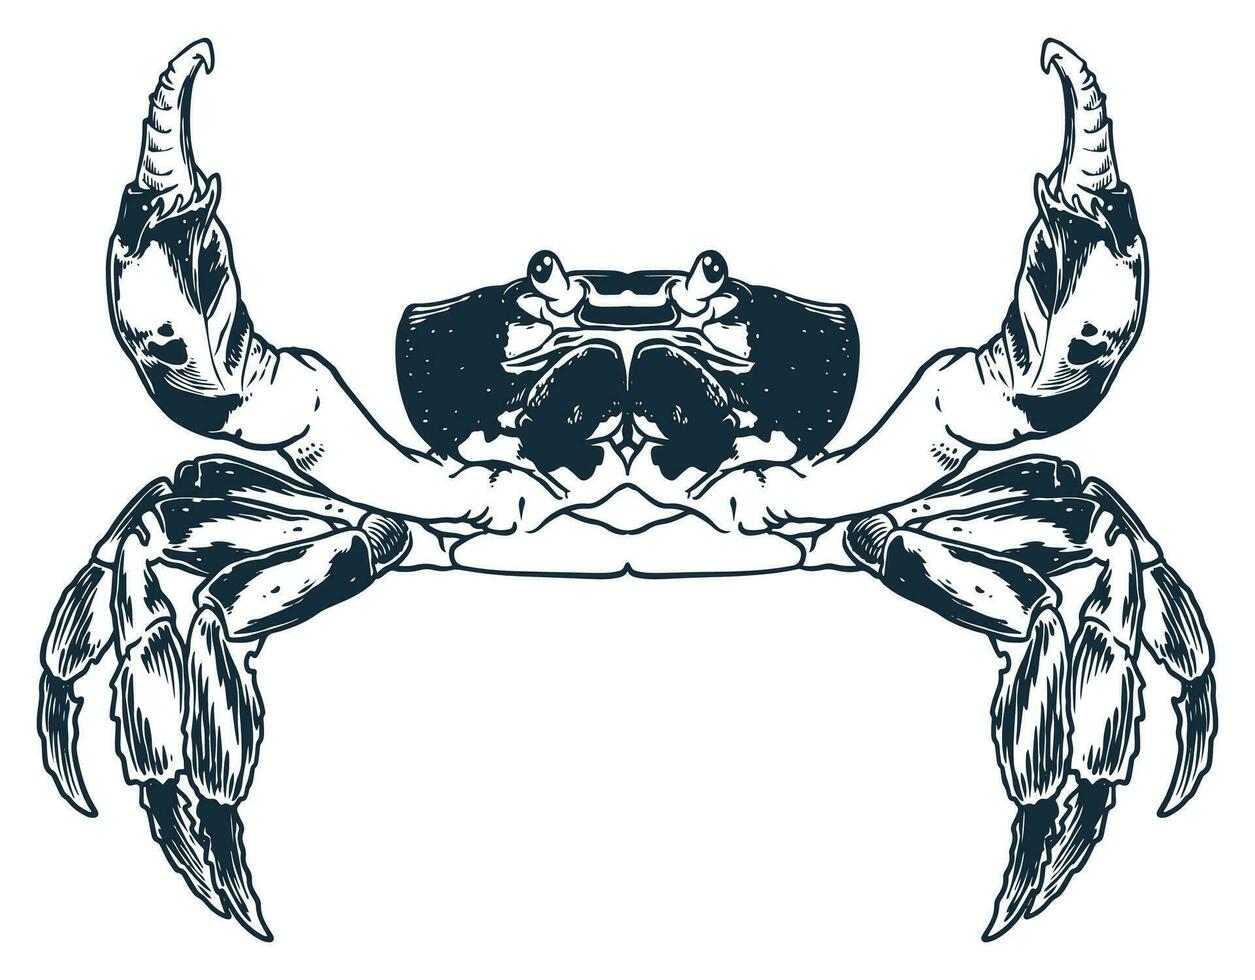 skaldjur djur- krabba gravyr teckning vektor hand skiss årgång stil